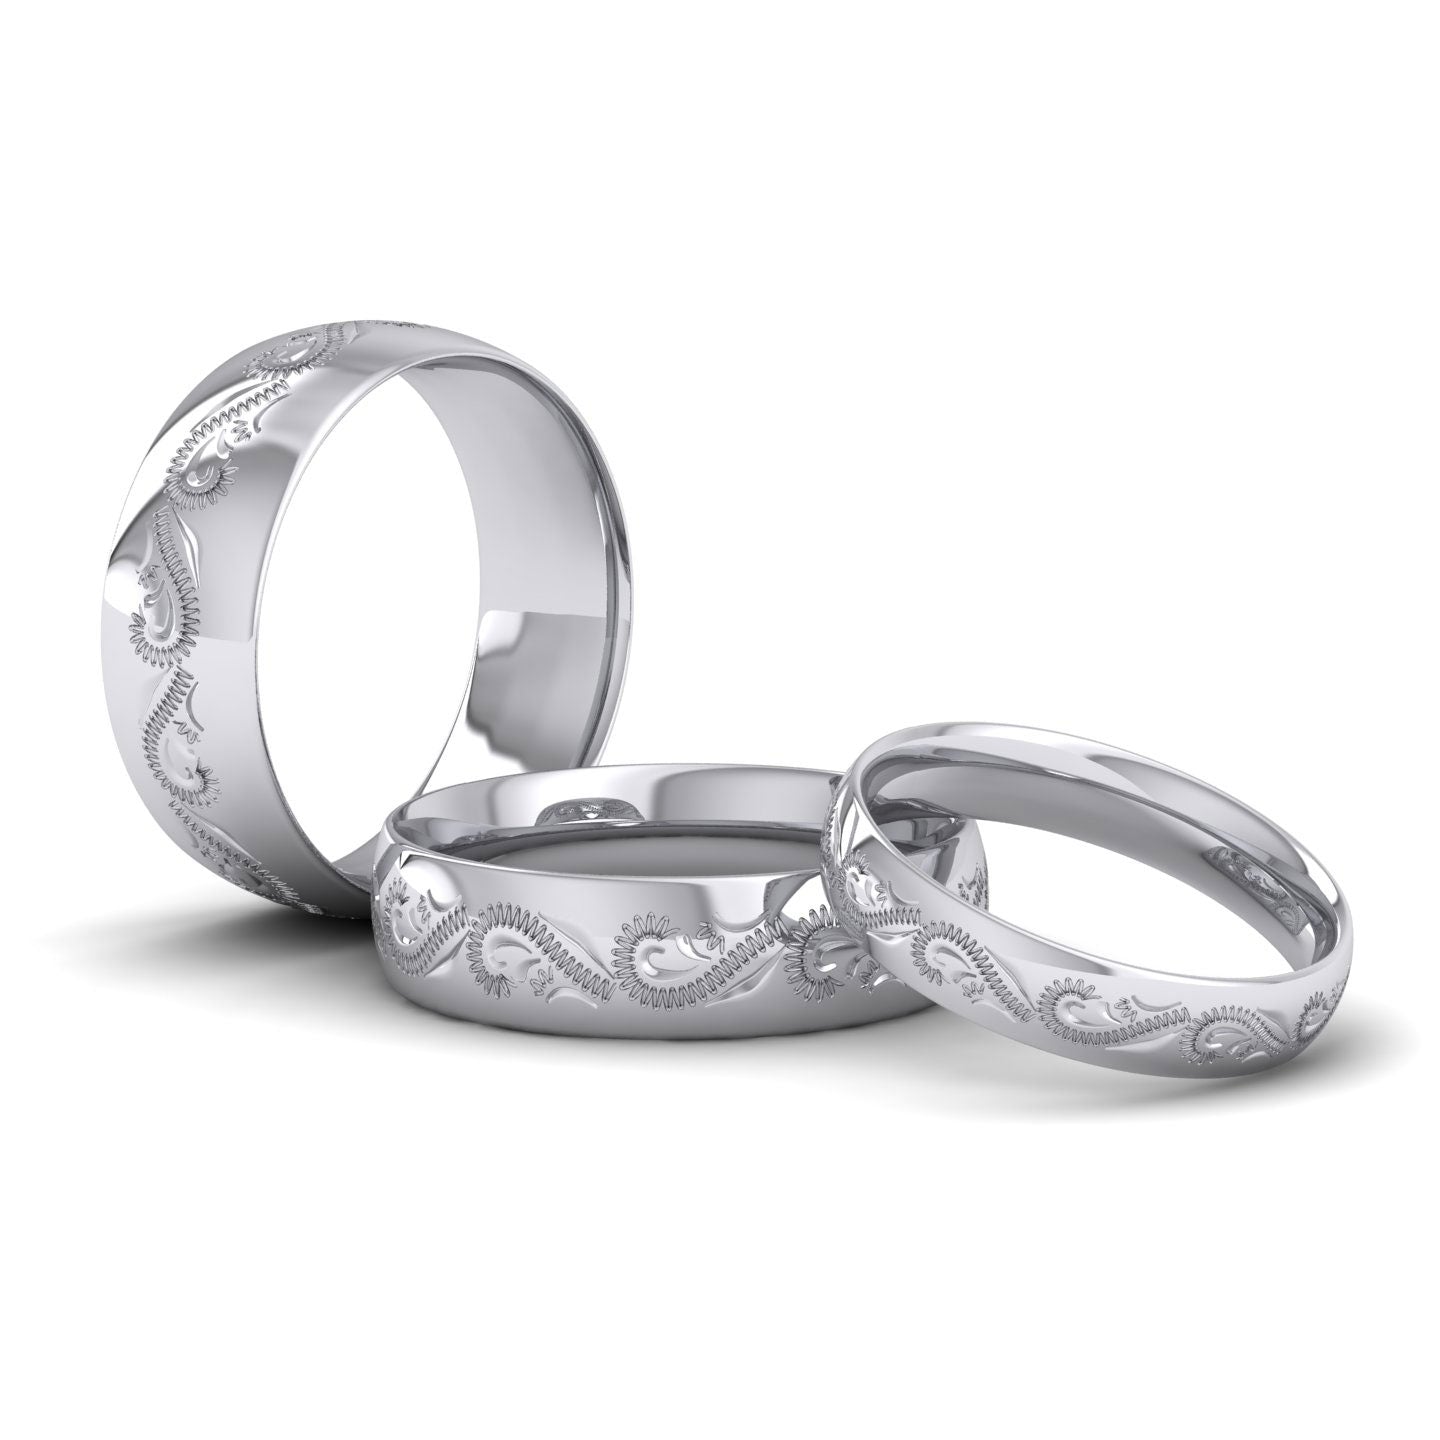 Engraved Court Shape 950 Platinum 8mm Wedding Ring